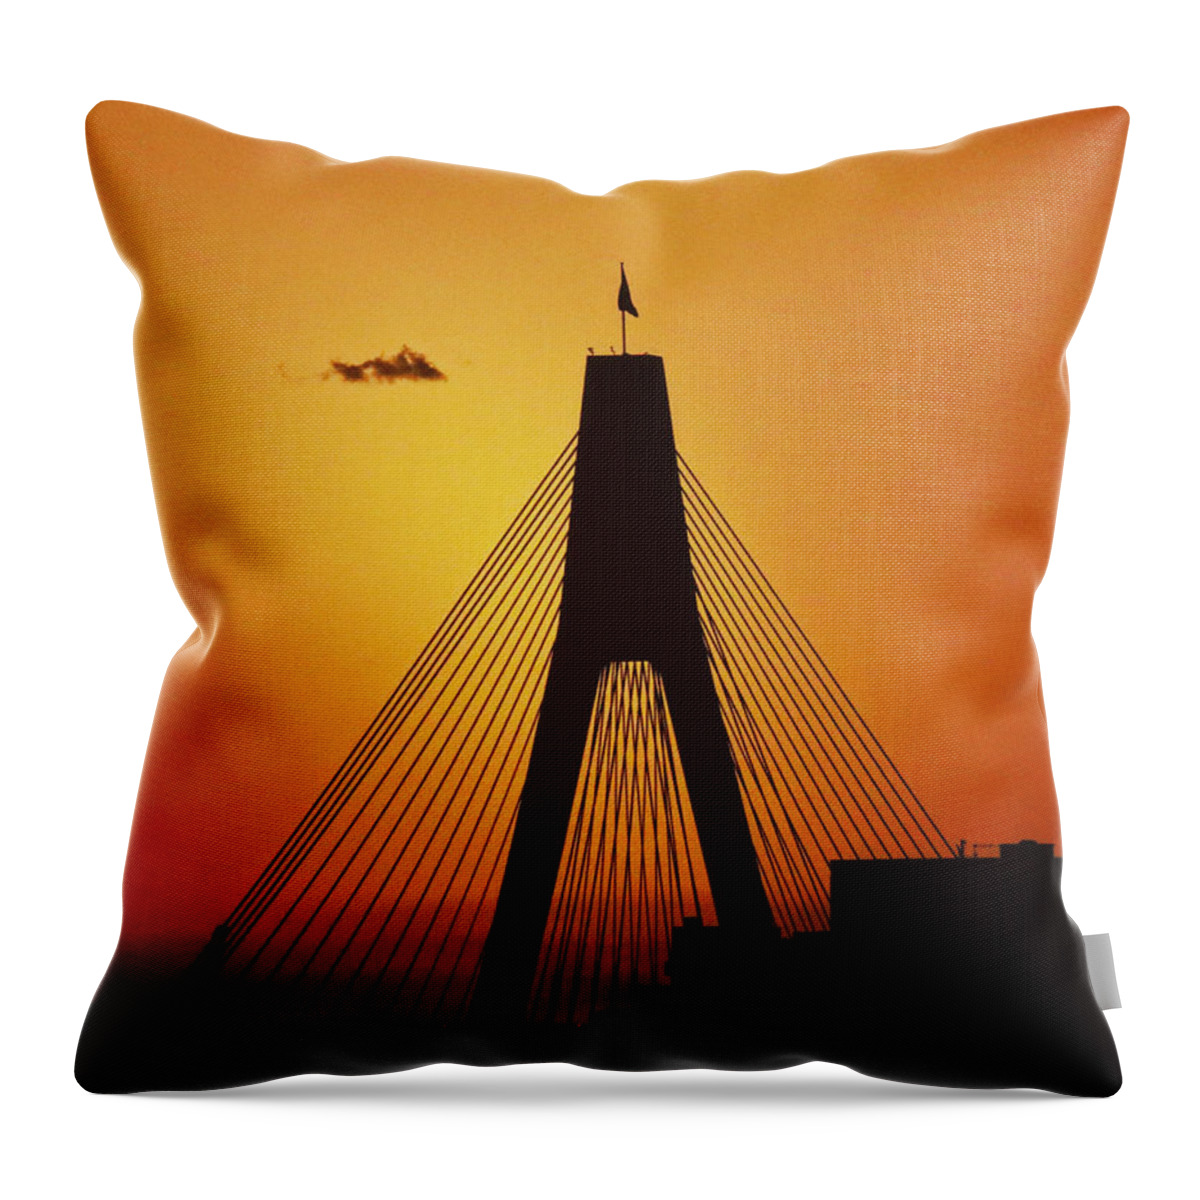 Anzac Throw Pillow featuring the photograph Anzac Bridge by Sarah Lilja